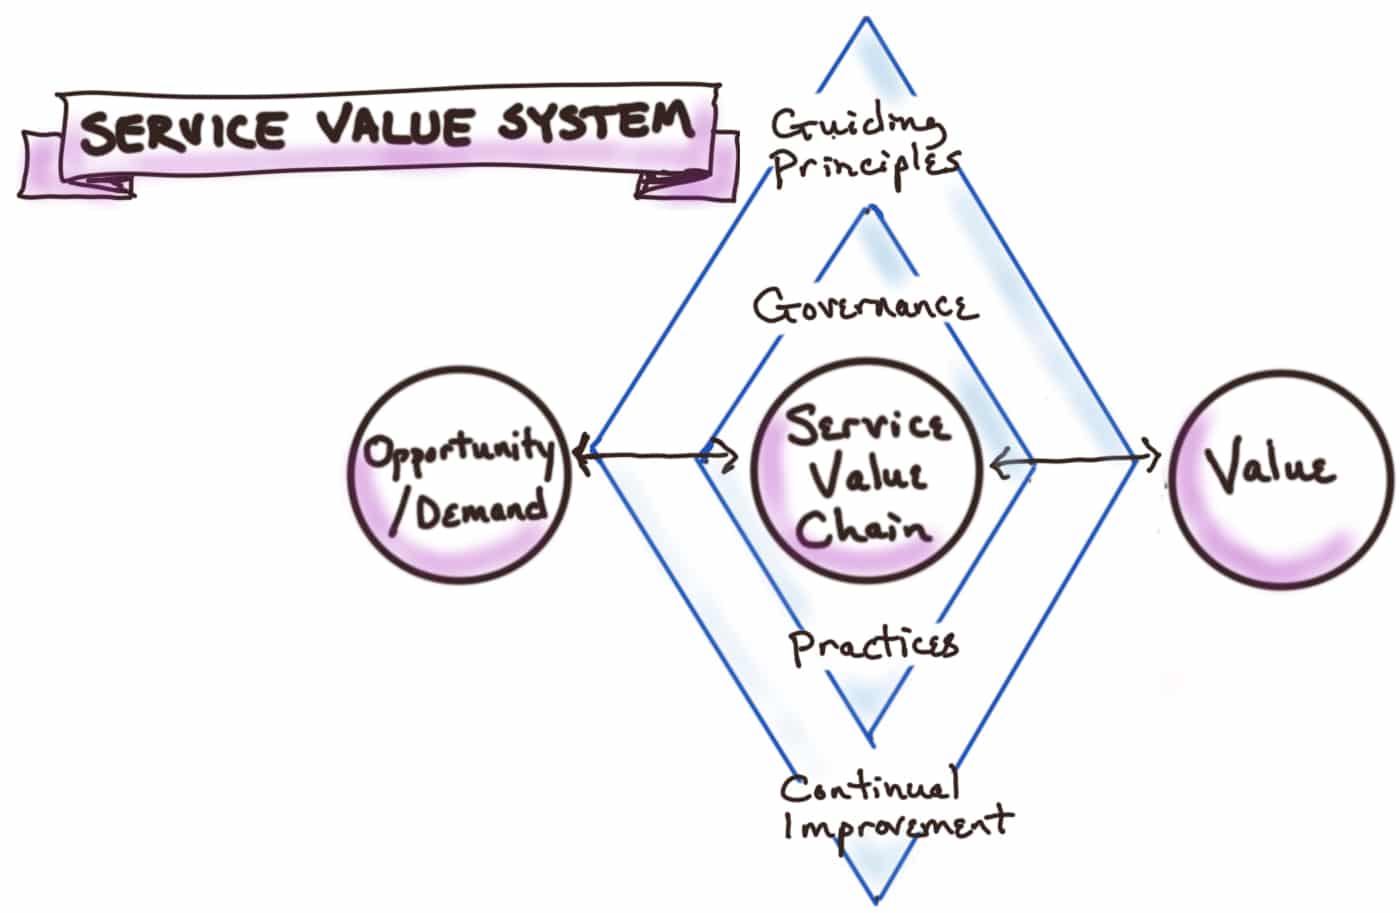 Service Value System